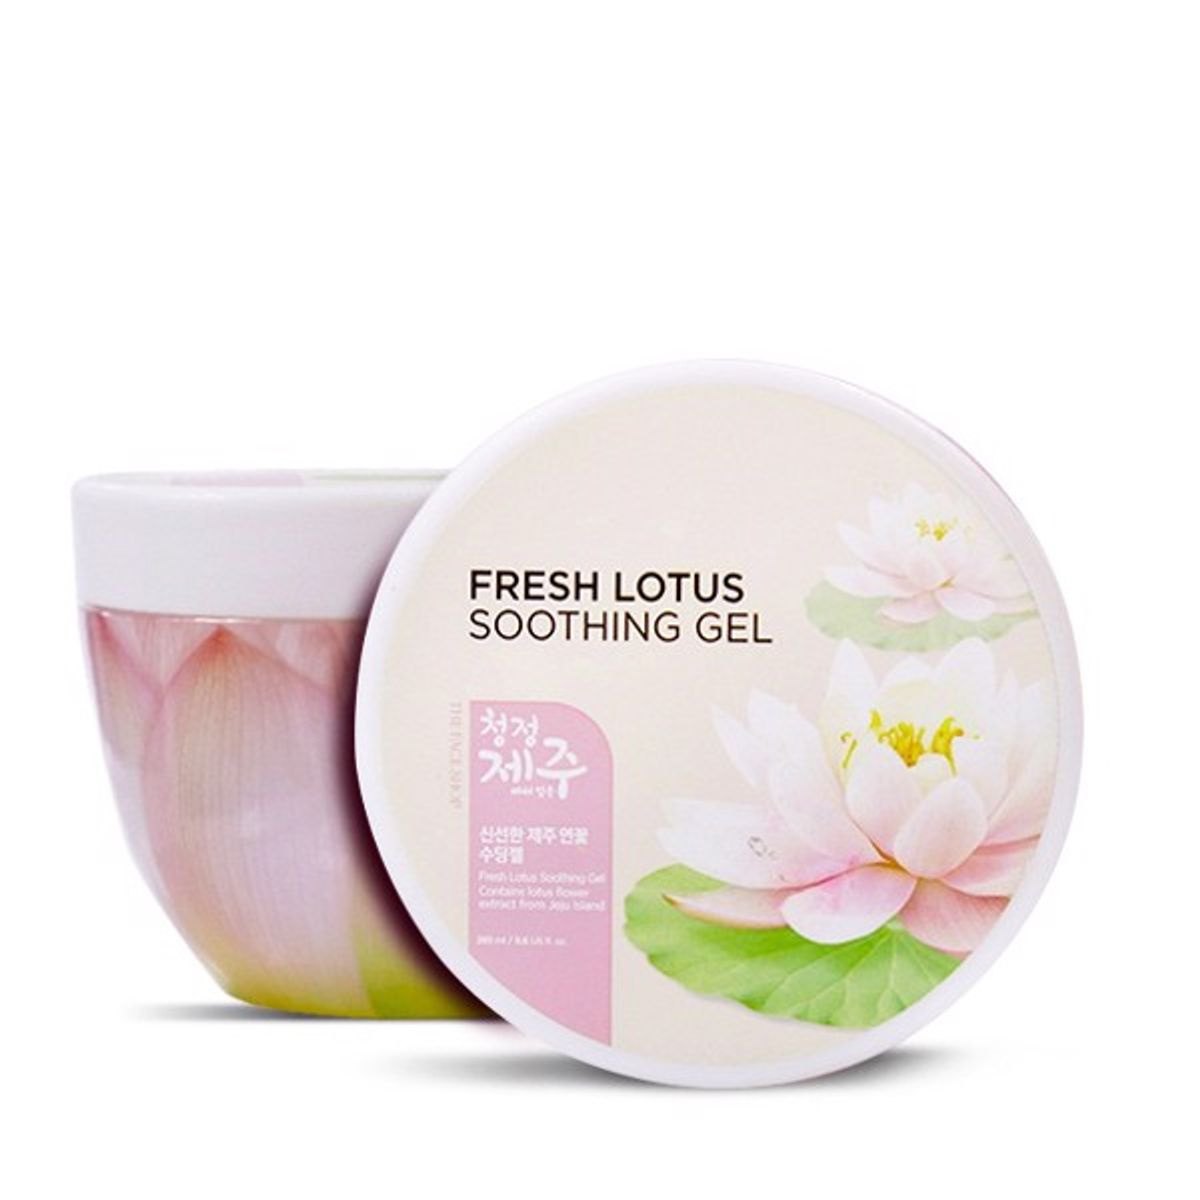 fresh-jeju-lotus-soothing-gel-1